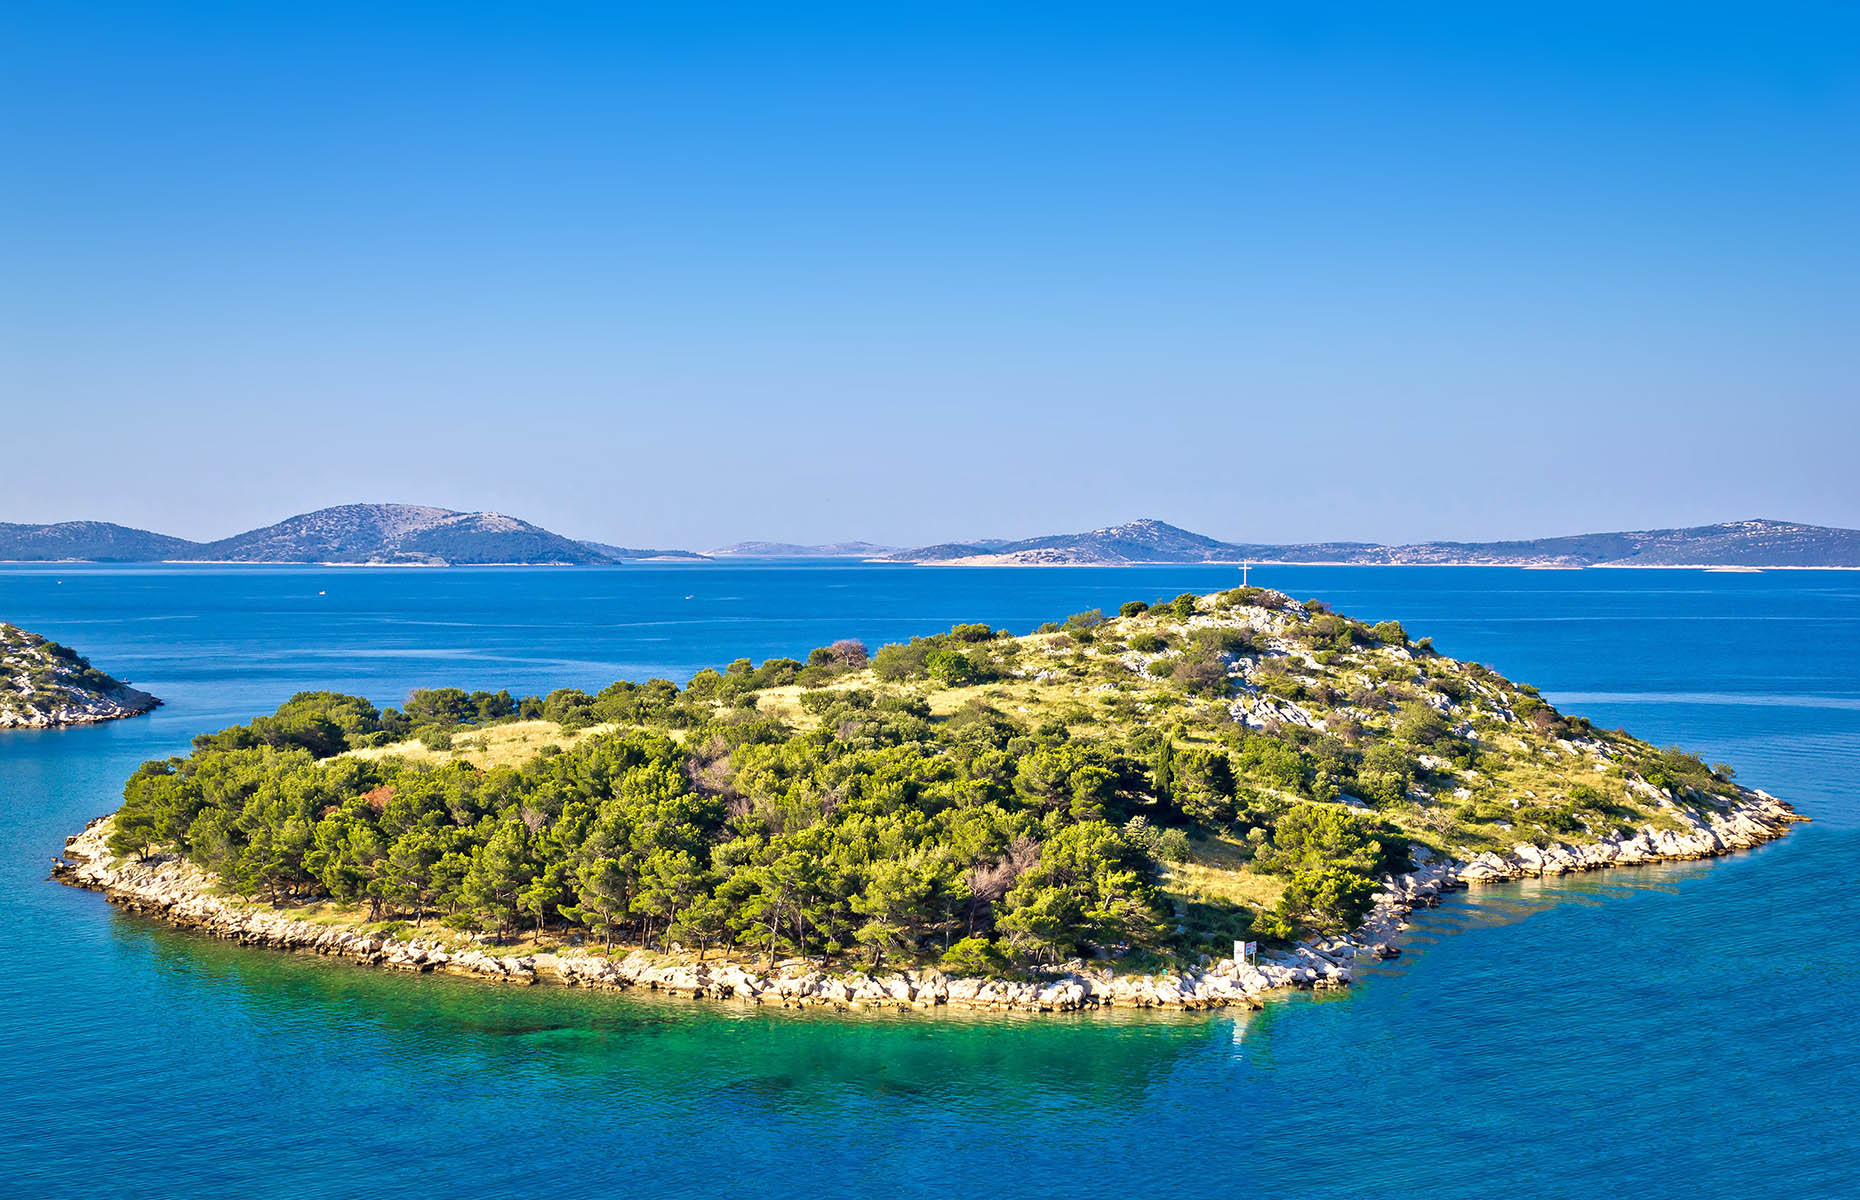 Kornati Islands National Park (Image: xbrchx/Shutterstock)